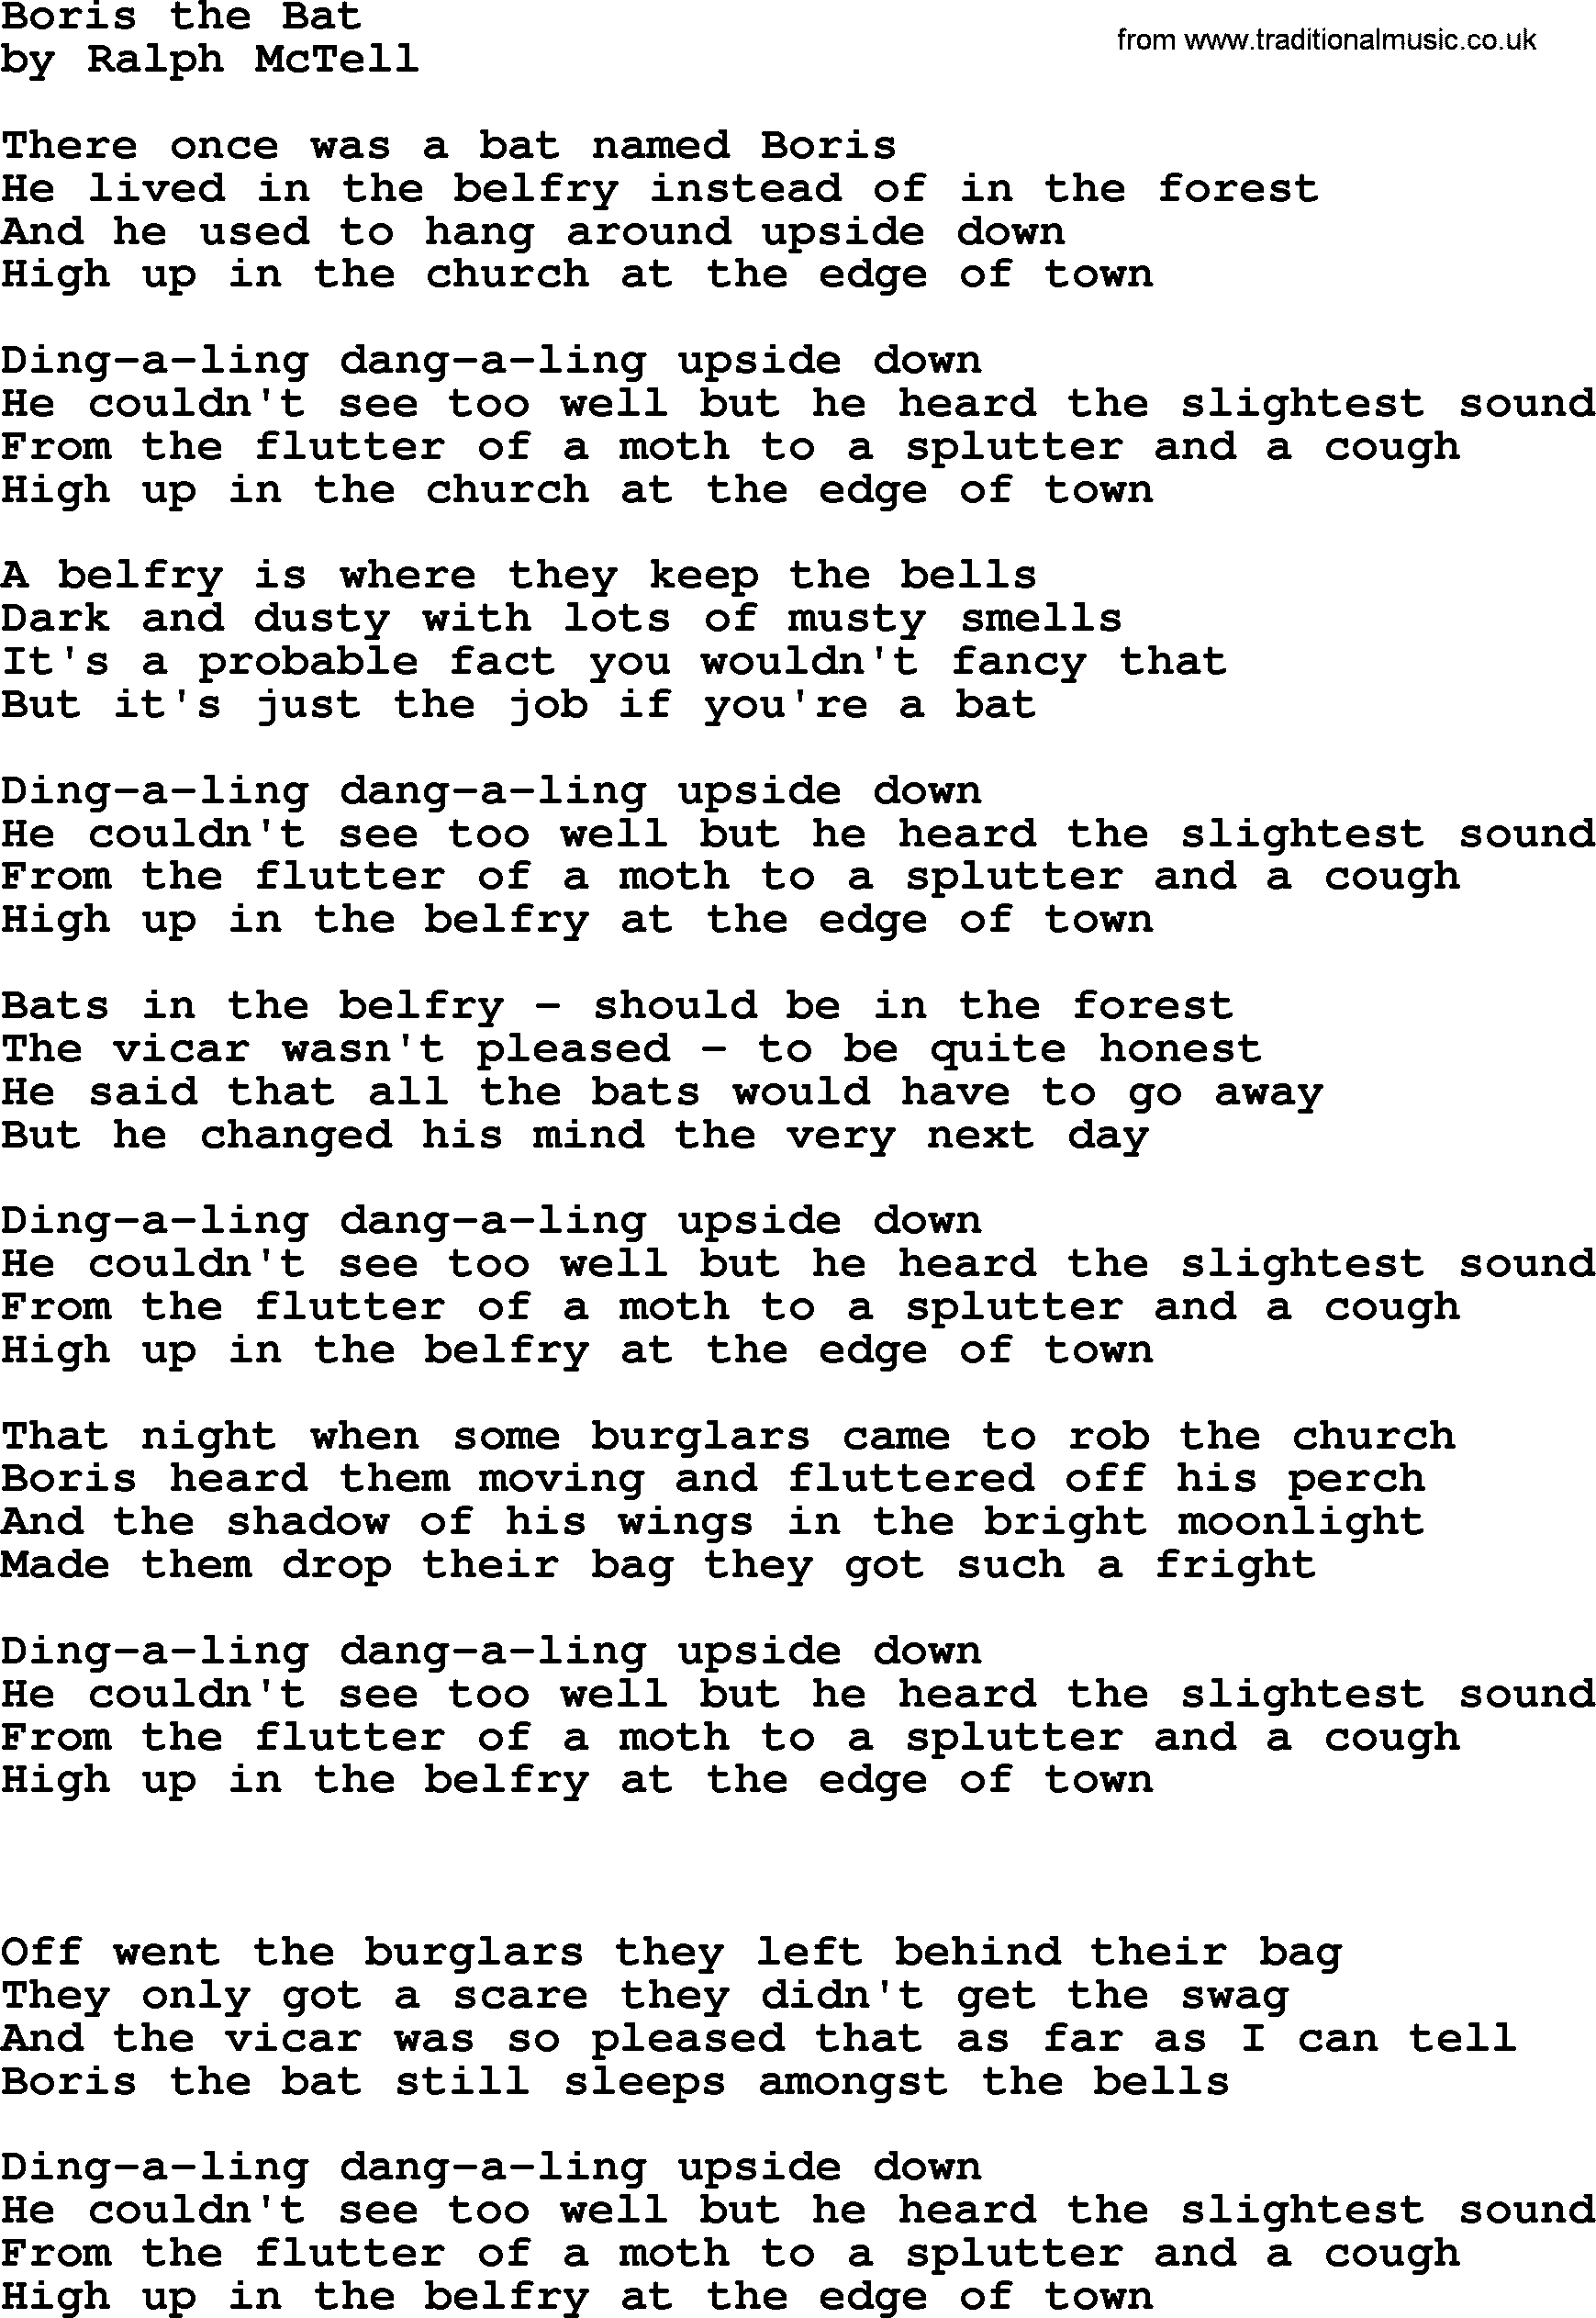 Ralph McTell Song: Boris The Bat, lyrics